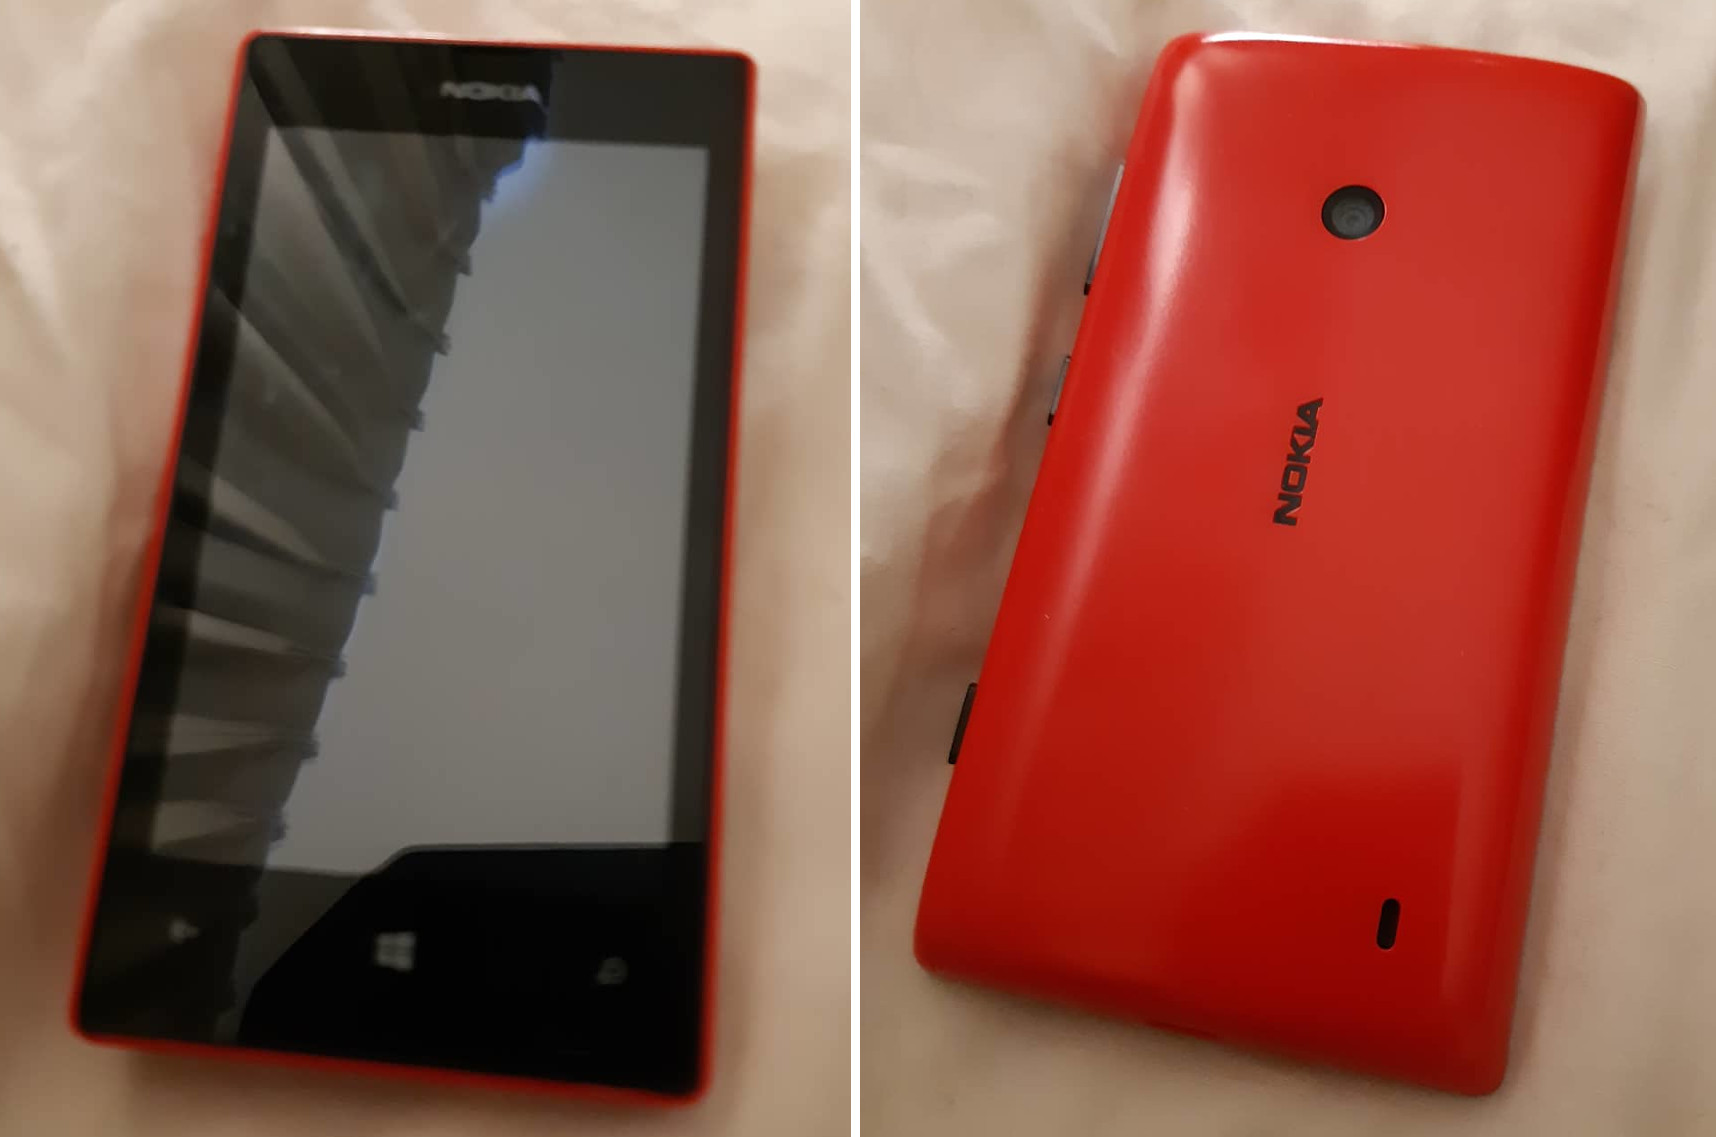 My Nokia Lumia 520